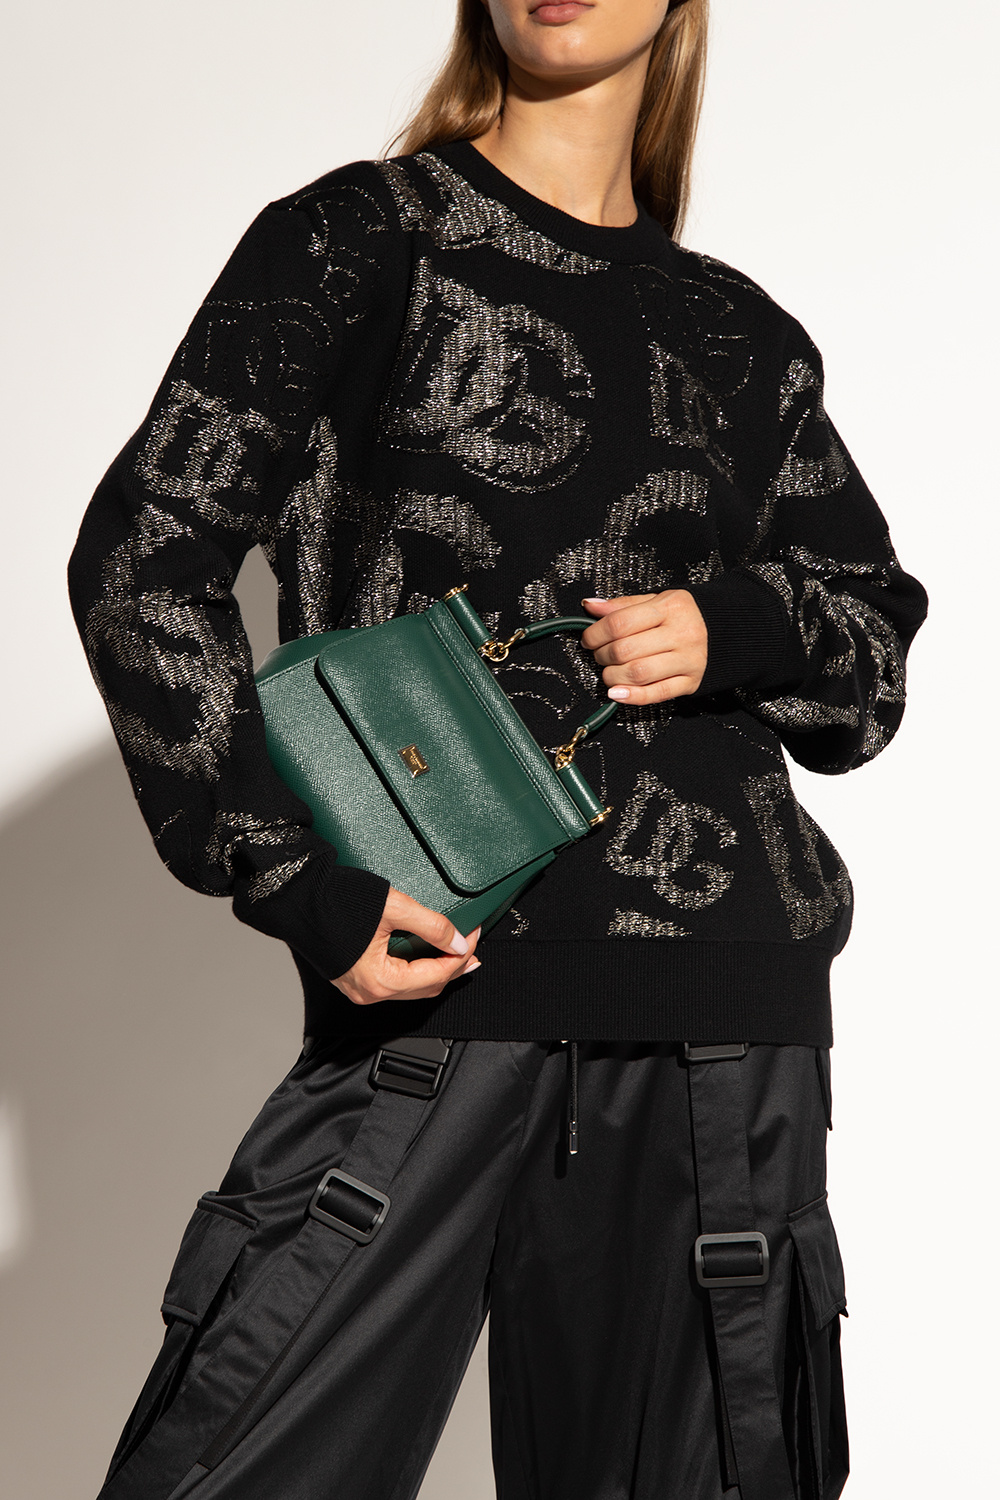 Beige Sicily small grained-leather handbag, Dolce & Gabbana